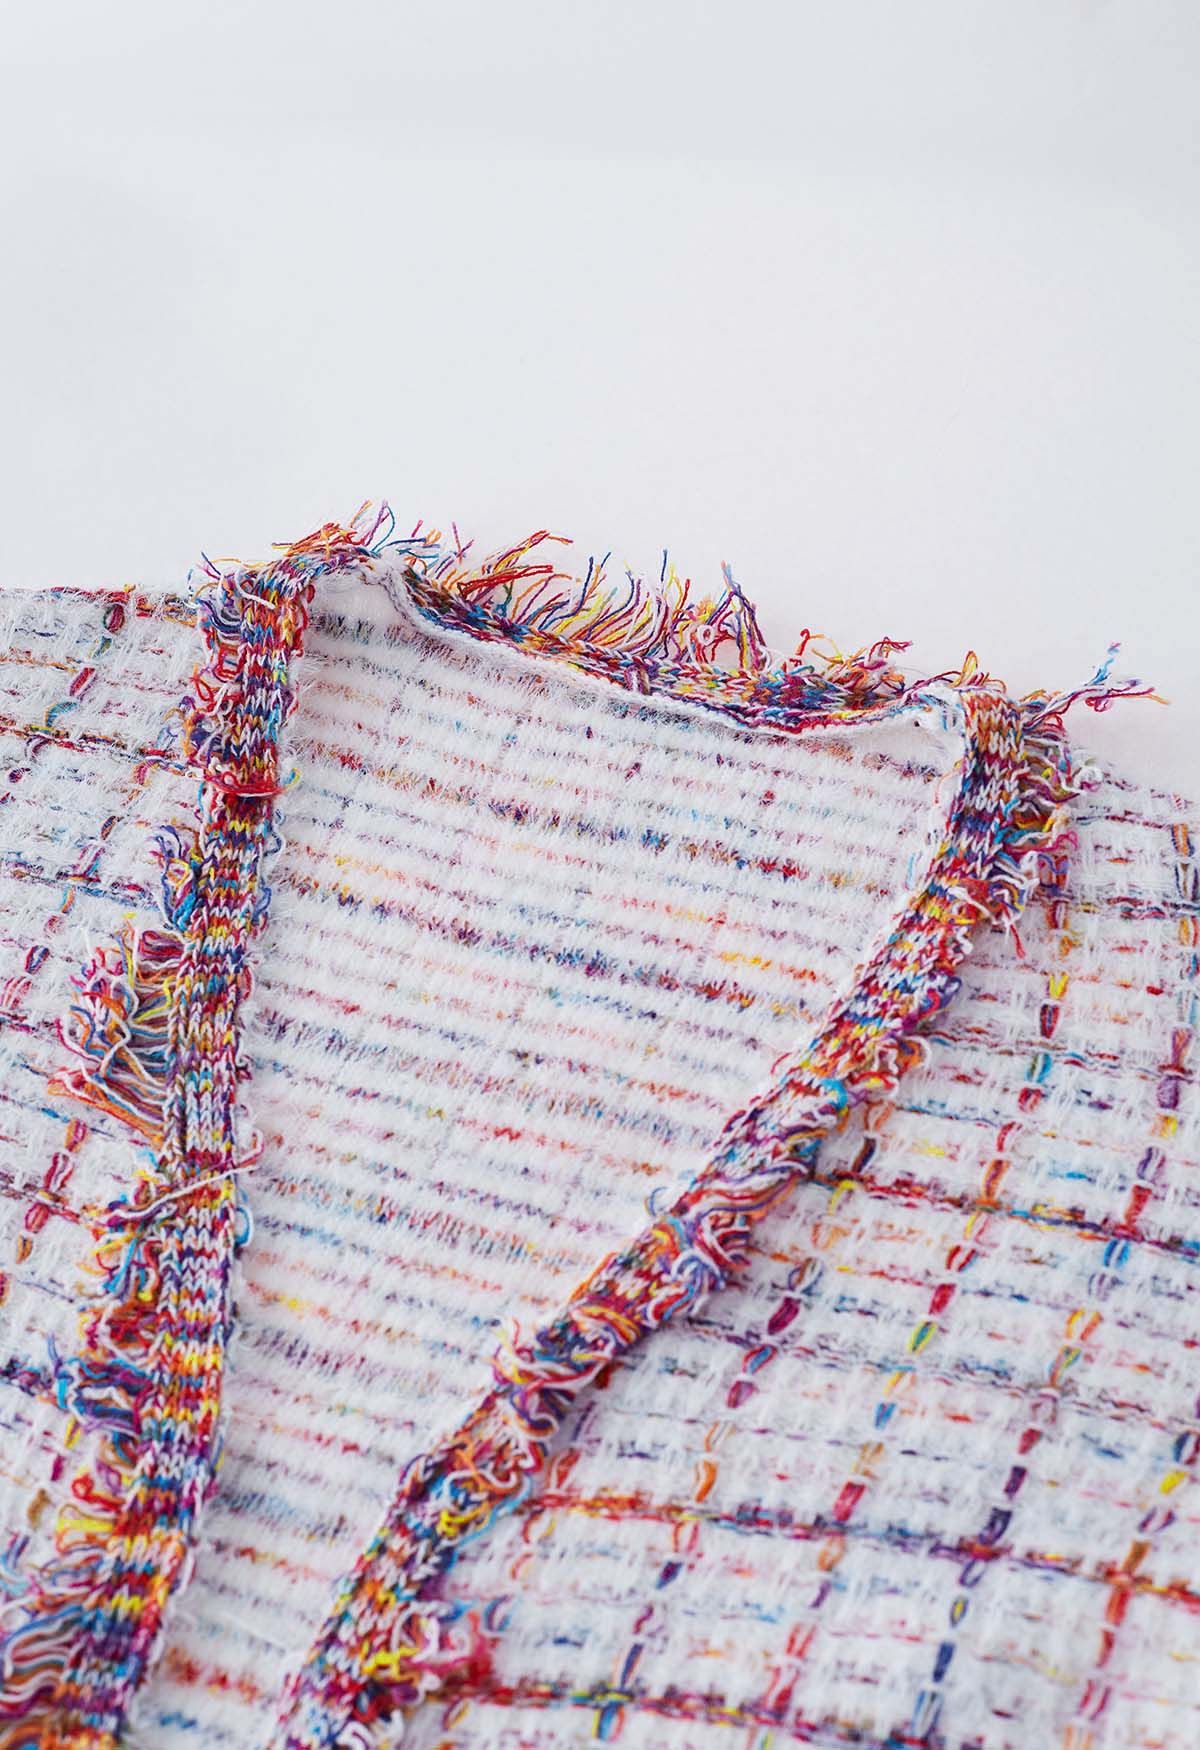 Multicolored Grid Pattern Longline Knit Cardigan in White